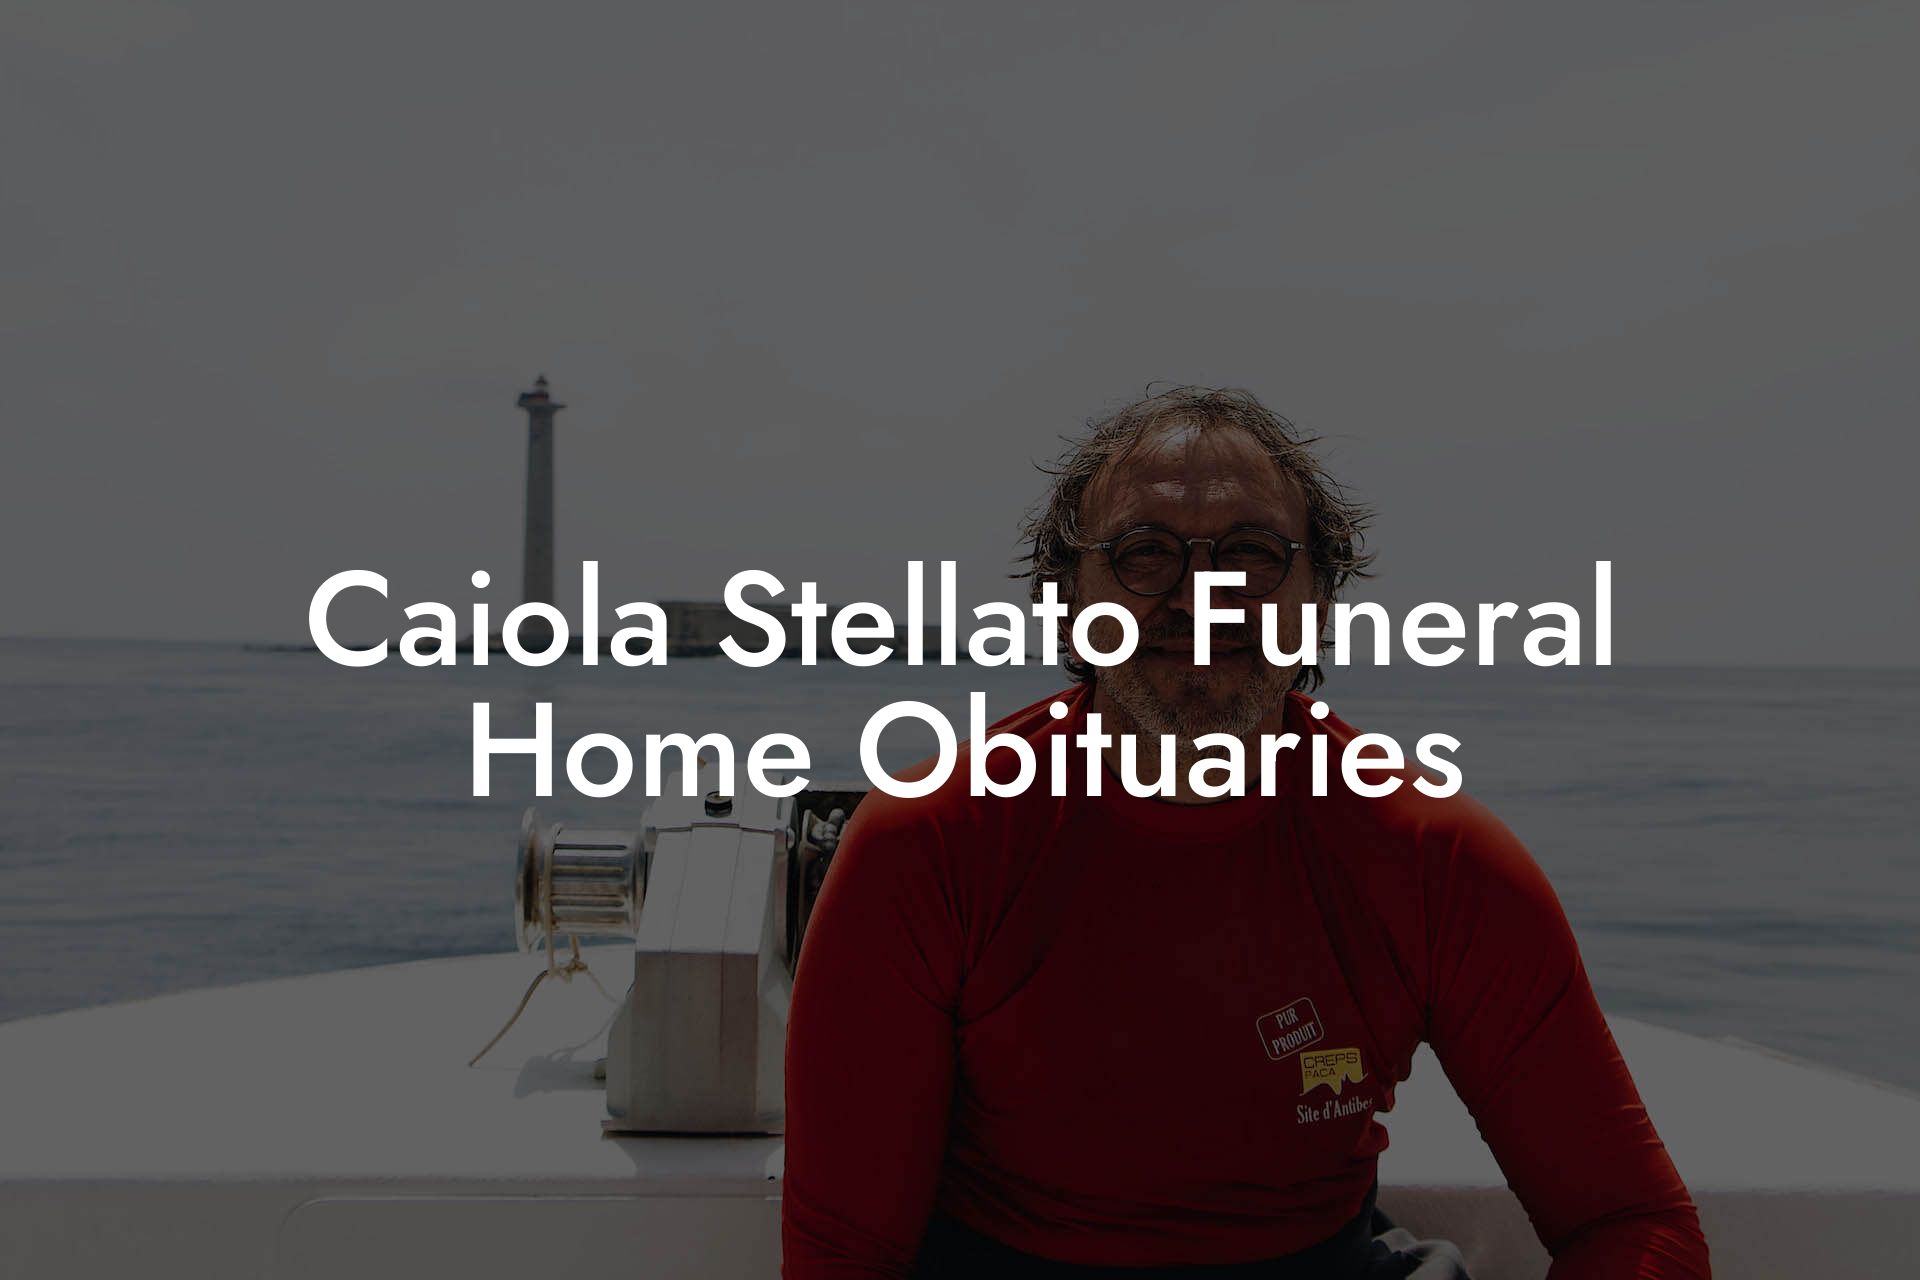 Caiola Stellato Funeral Home Obituaries